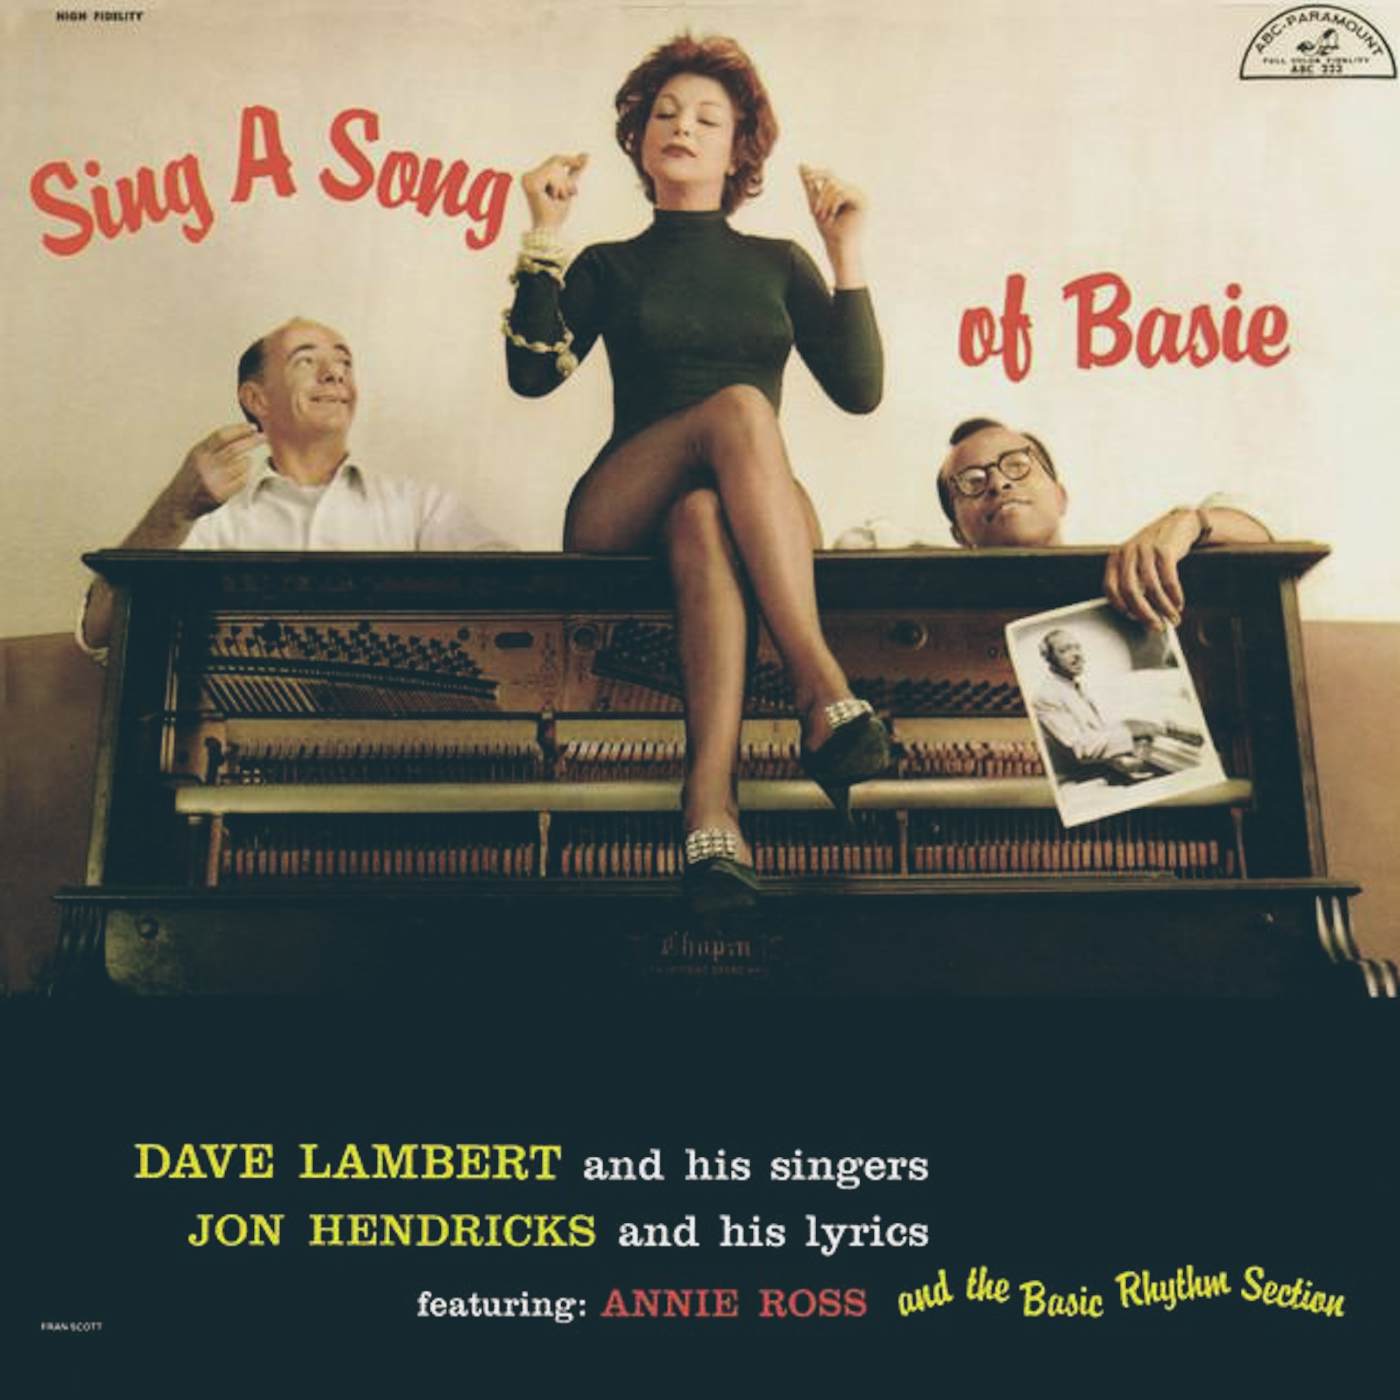 Dave Lambert